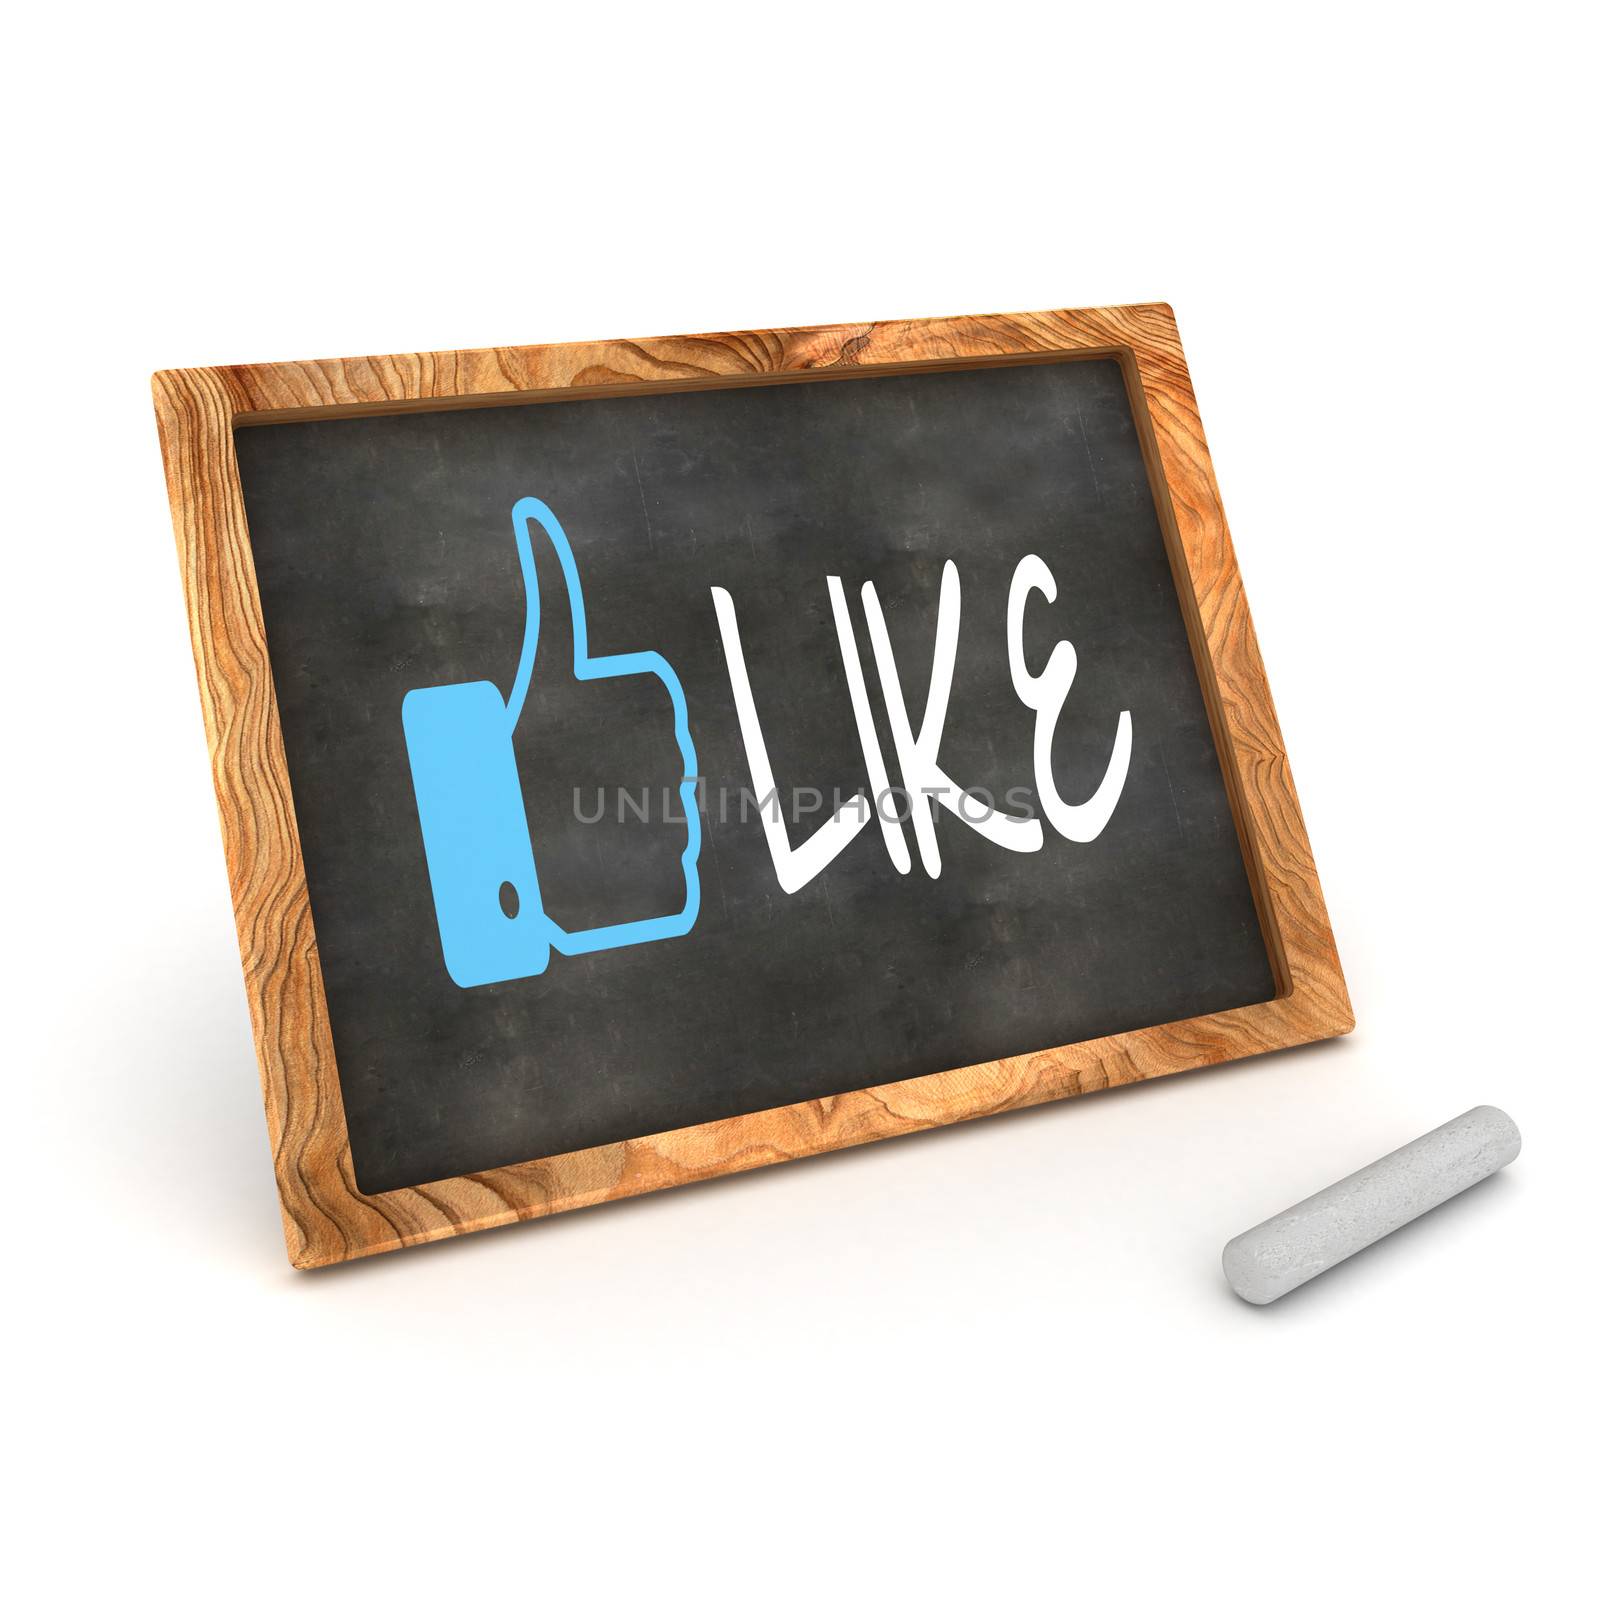 Blackboard showing "Like us" as used in social networks by head-off